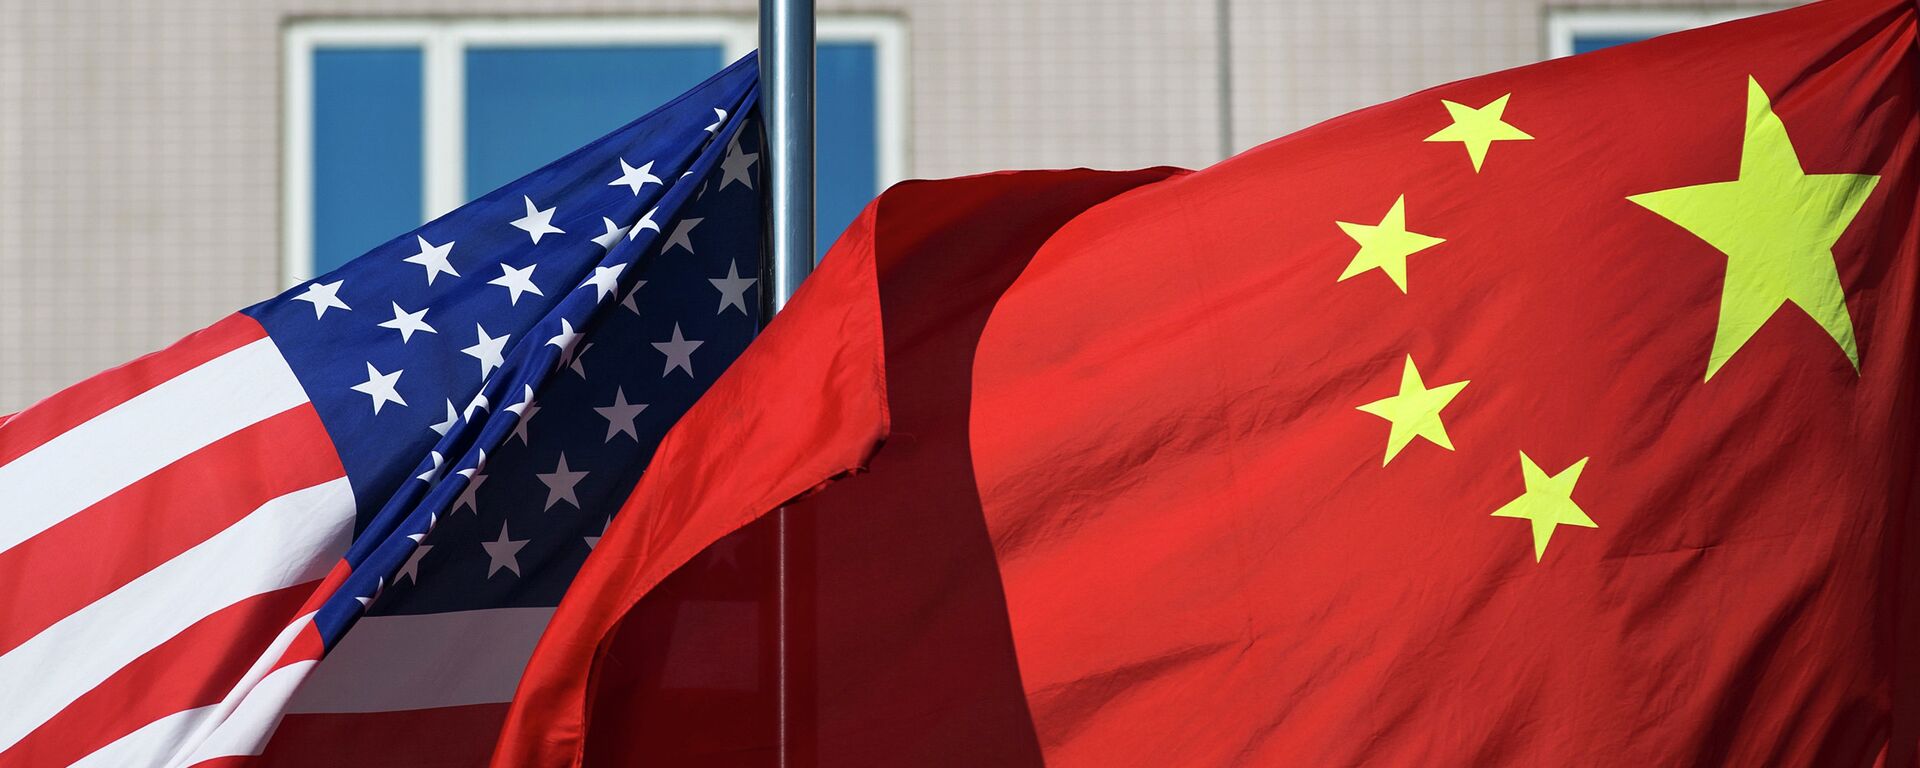 U.S. flag and China's flag flutter in winds at a hotel in Beijing Wednesday, Sept. 5, 2012 - Sputnik Mundo, 1920, 23.03.2021